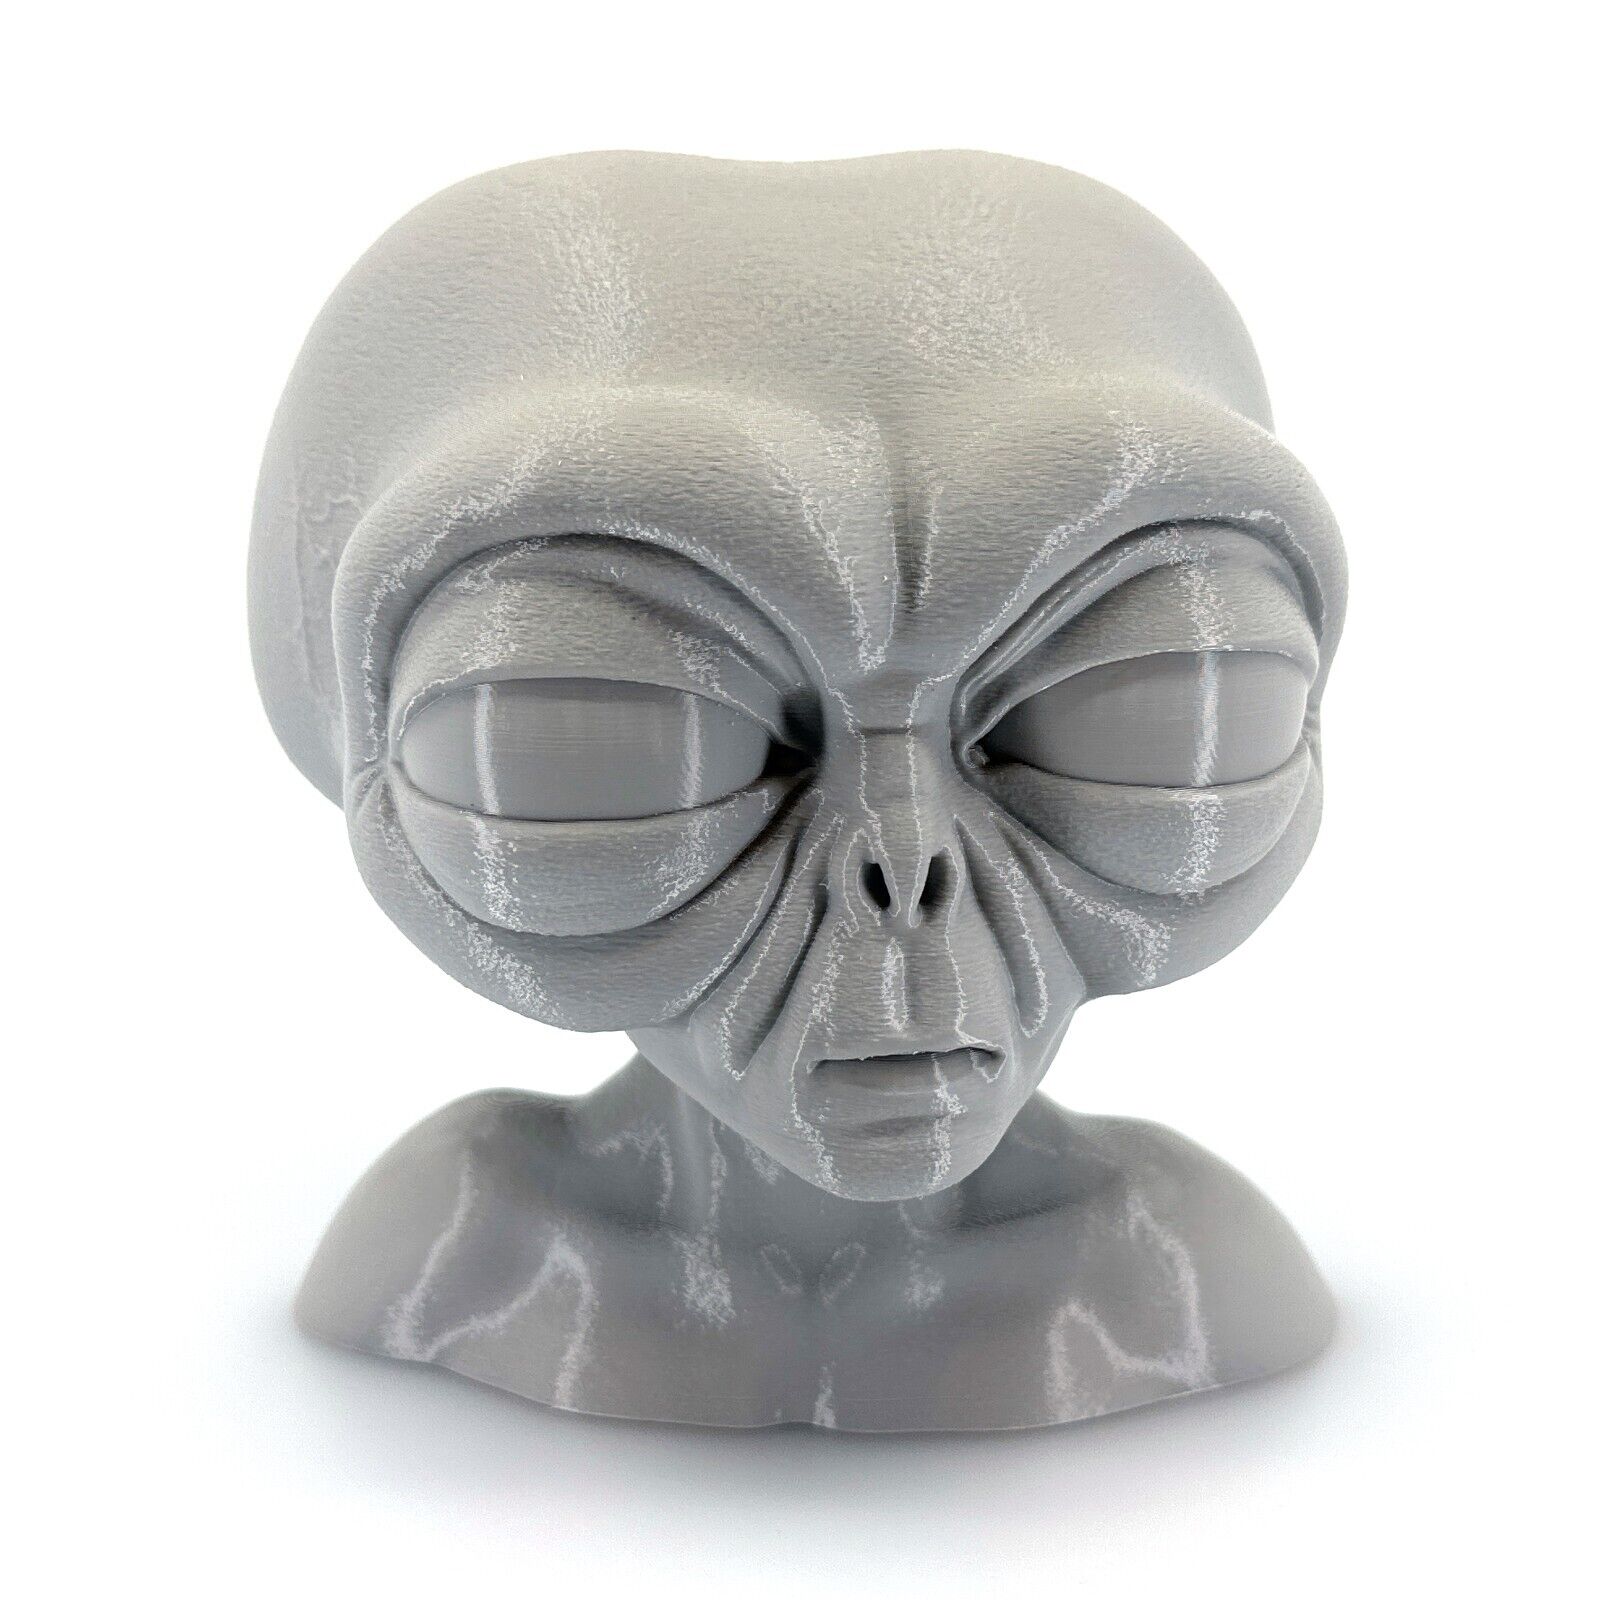 Grey Alien Head Bust 3D Printed Model - Highly Detailed Sci-Fi Display, 150mm